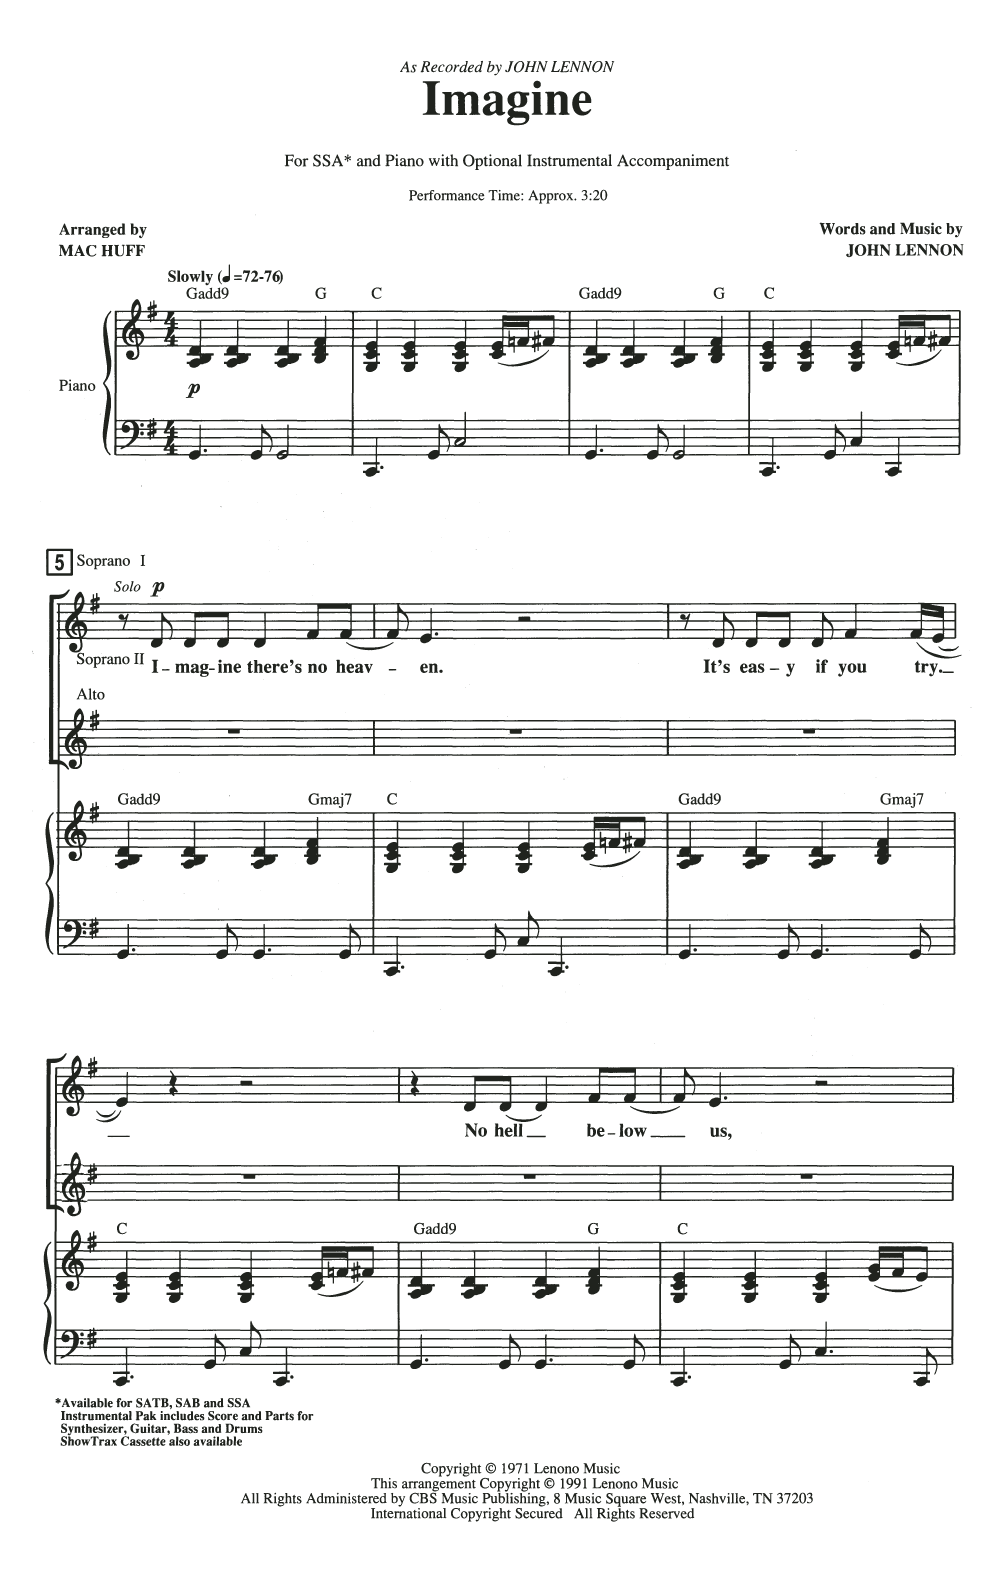 John Lennon Imagine (arr. Mac Huff) Sheet Music Notes & Chords for SSA - Download or Print PDF